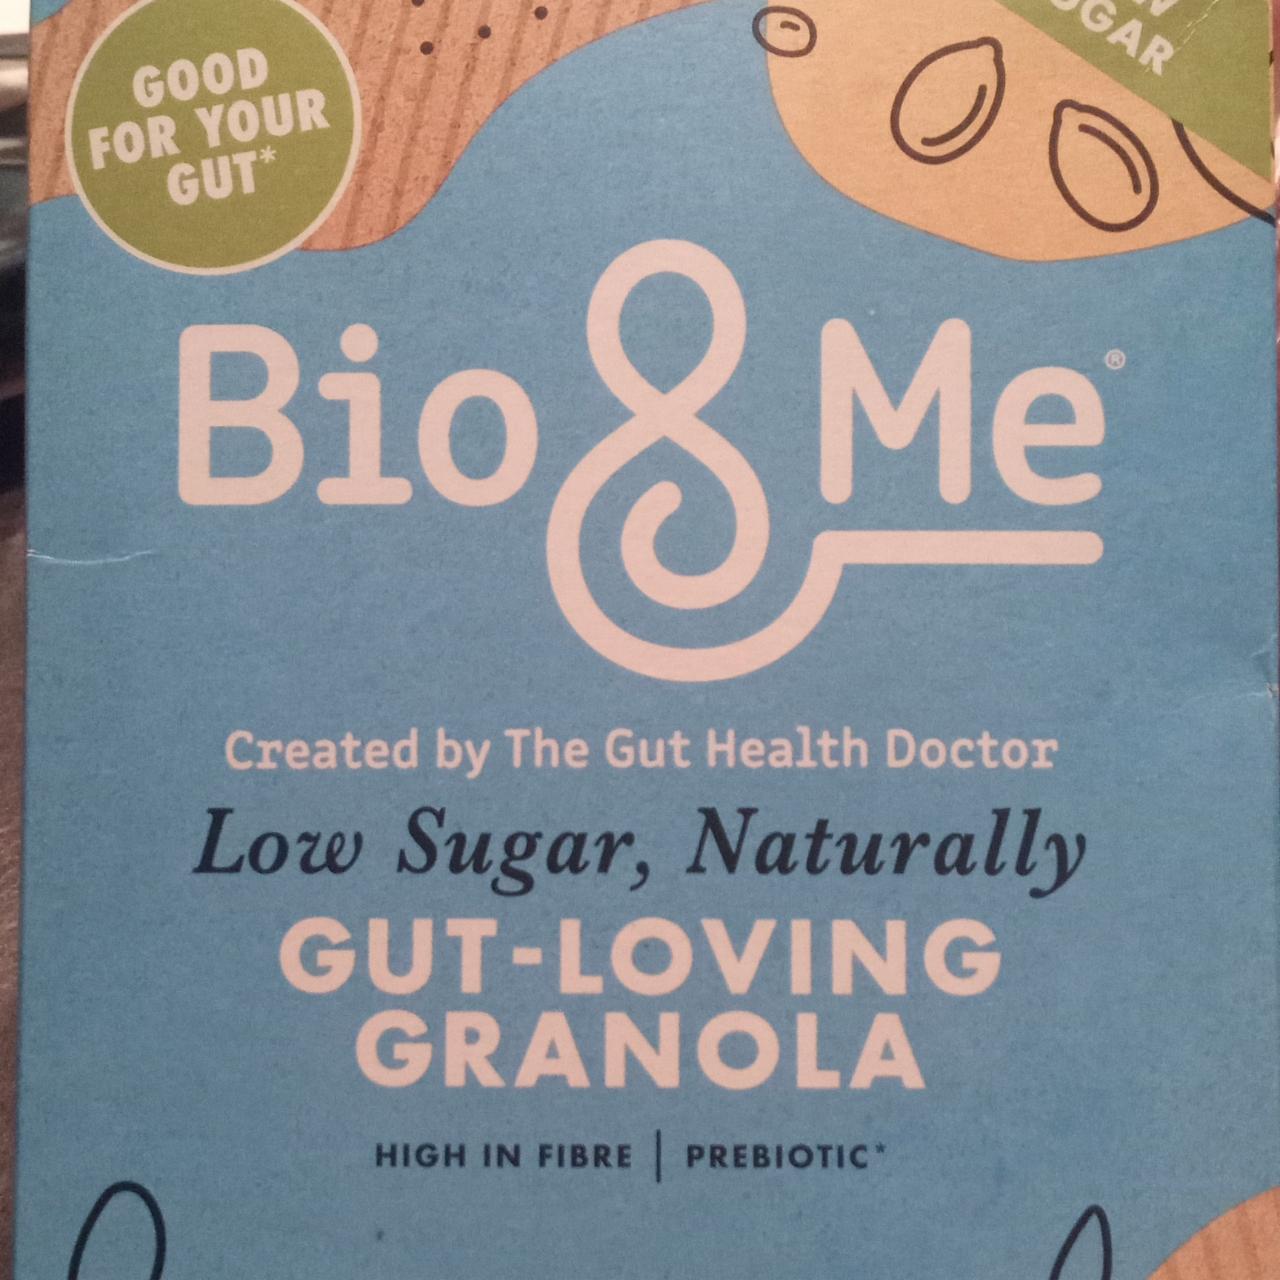 Fotografie - Granola low sugar, naturally Gut-Loving Prebiotic* Bio & Me